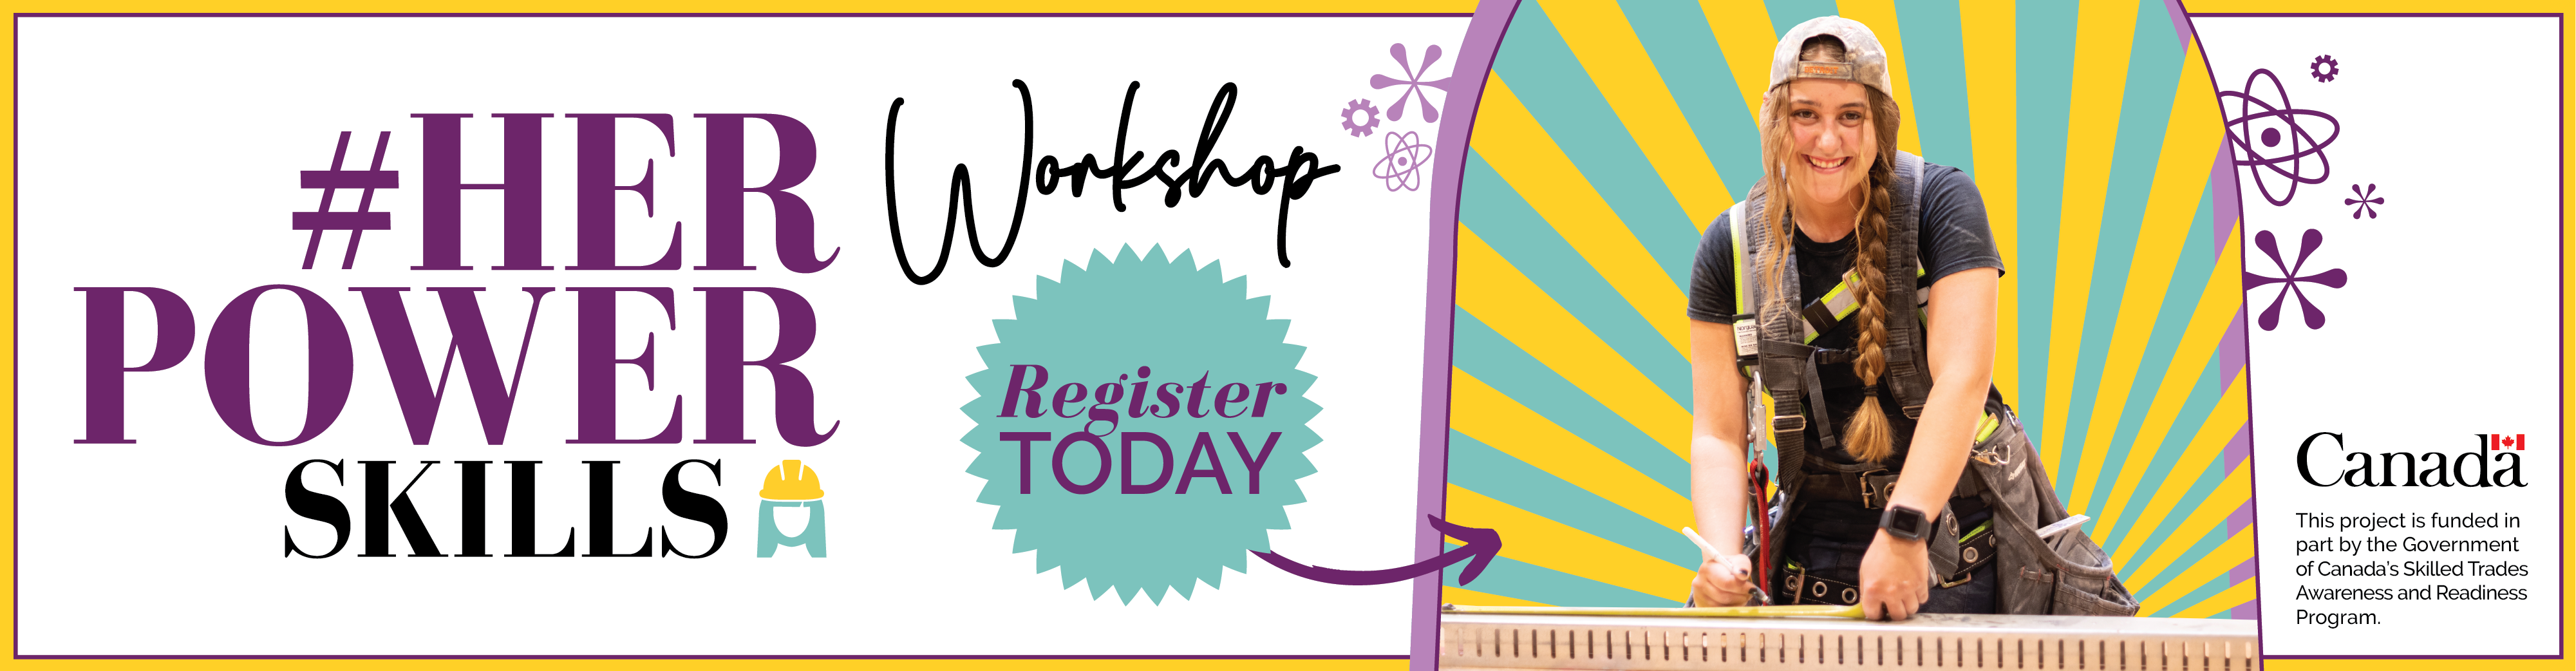 Register Today for #HerPower Skills Workshop